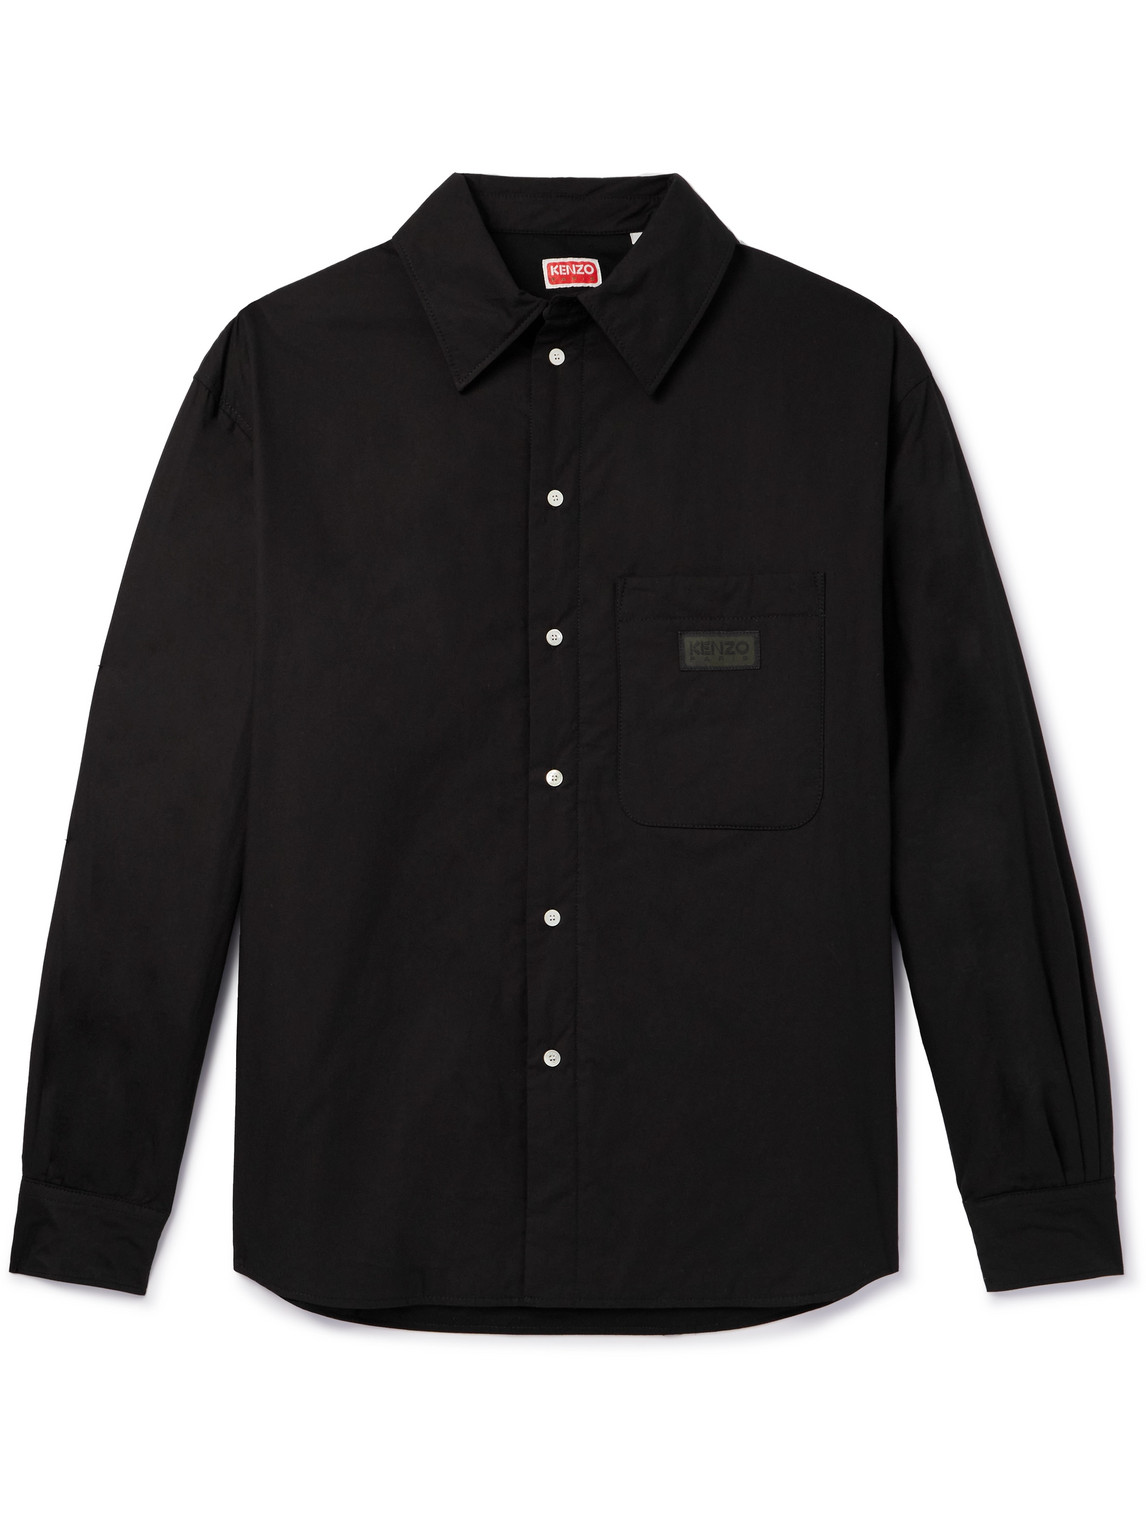 KENZO - Logo-Appliquéd Padded Cotton Overshirt - Men - Black - S von KENZO